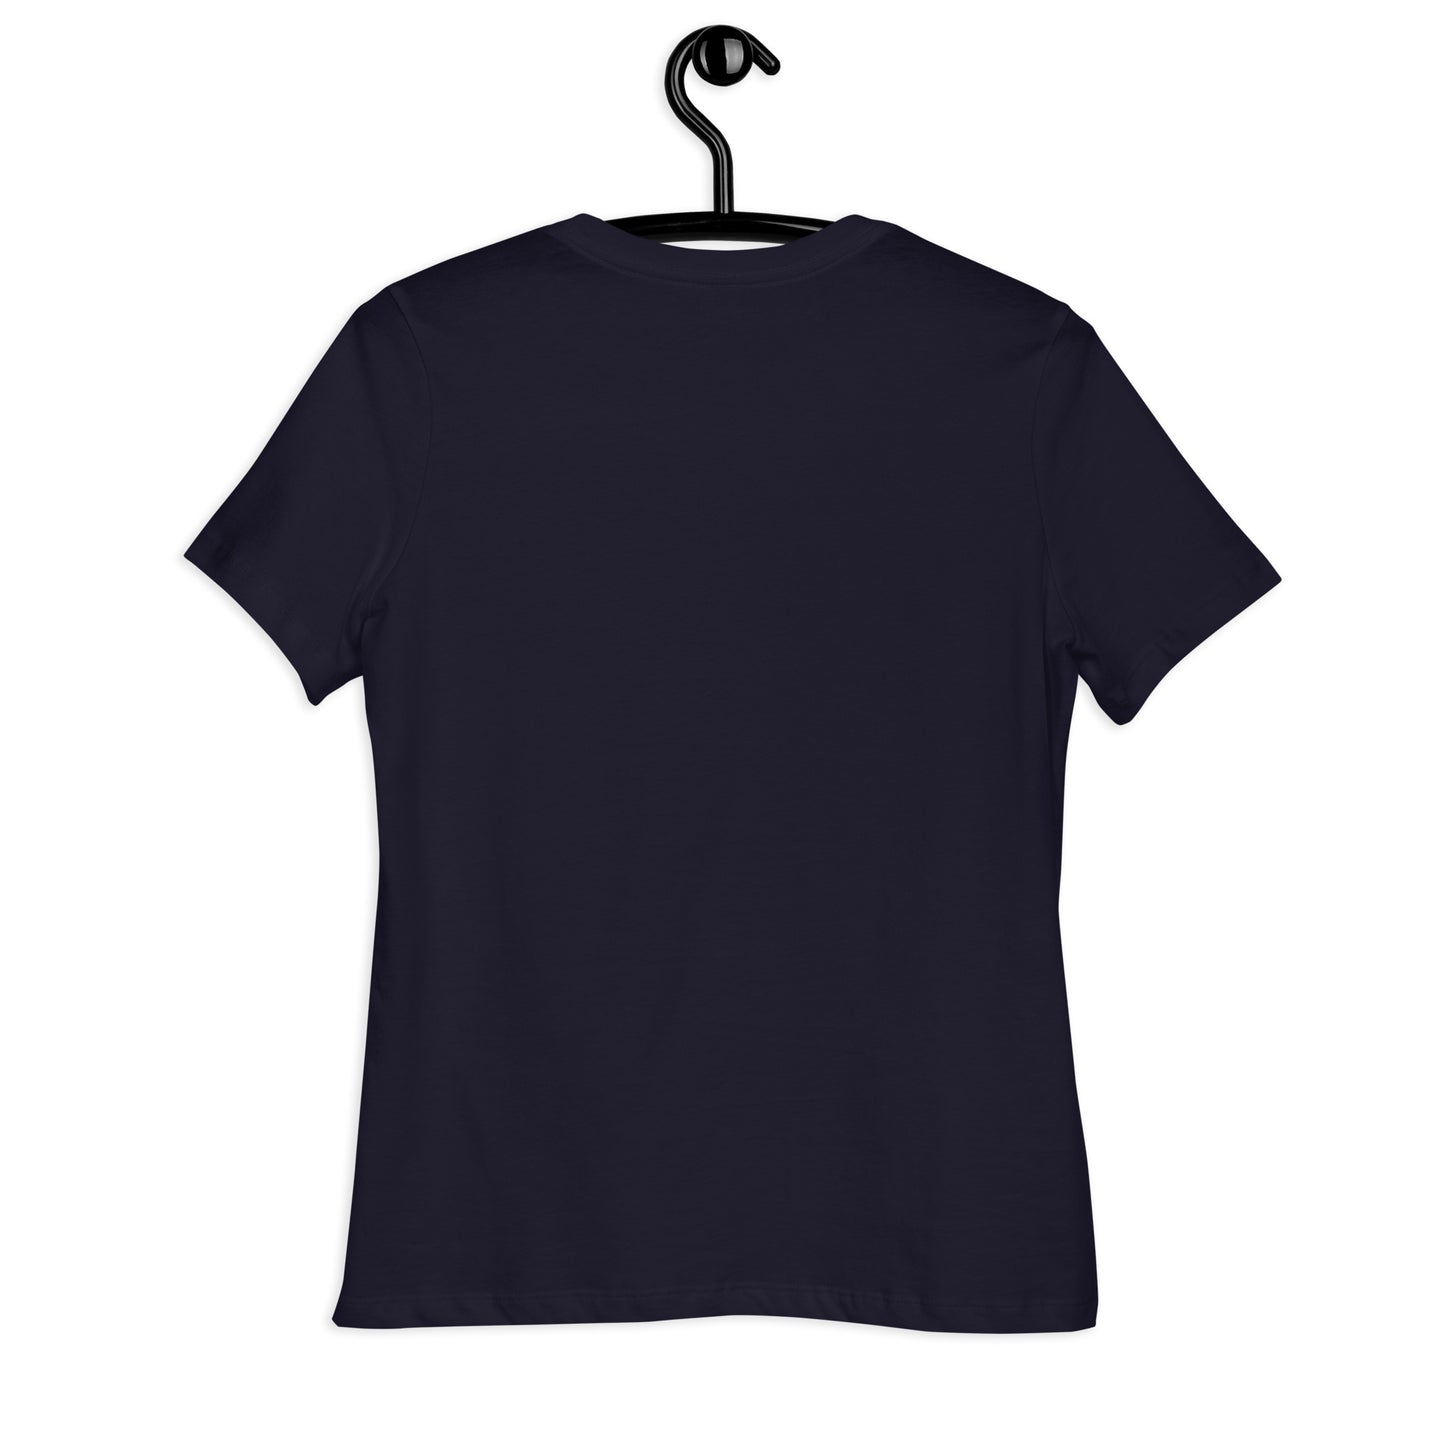 Just Call Me Sassenach T-shirt | Outlander Gifts | Sassenach Tee | Claire Fraser Women's Relaxed T-Shirt